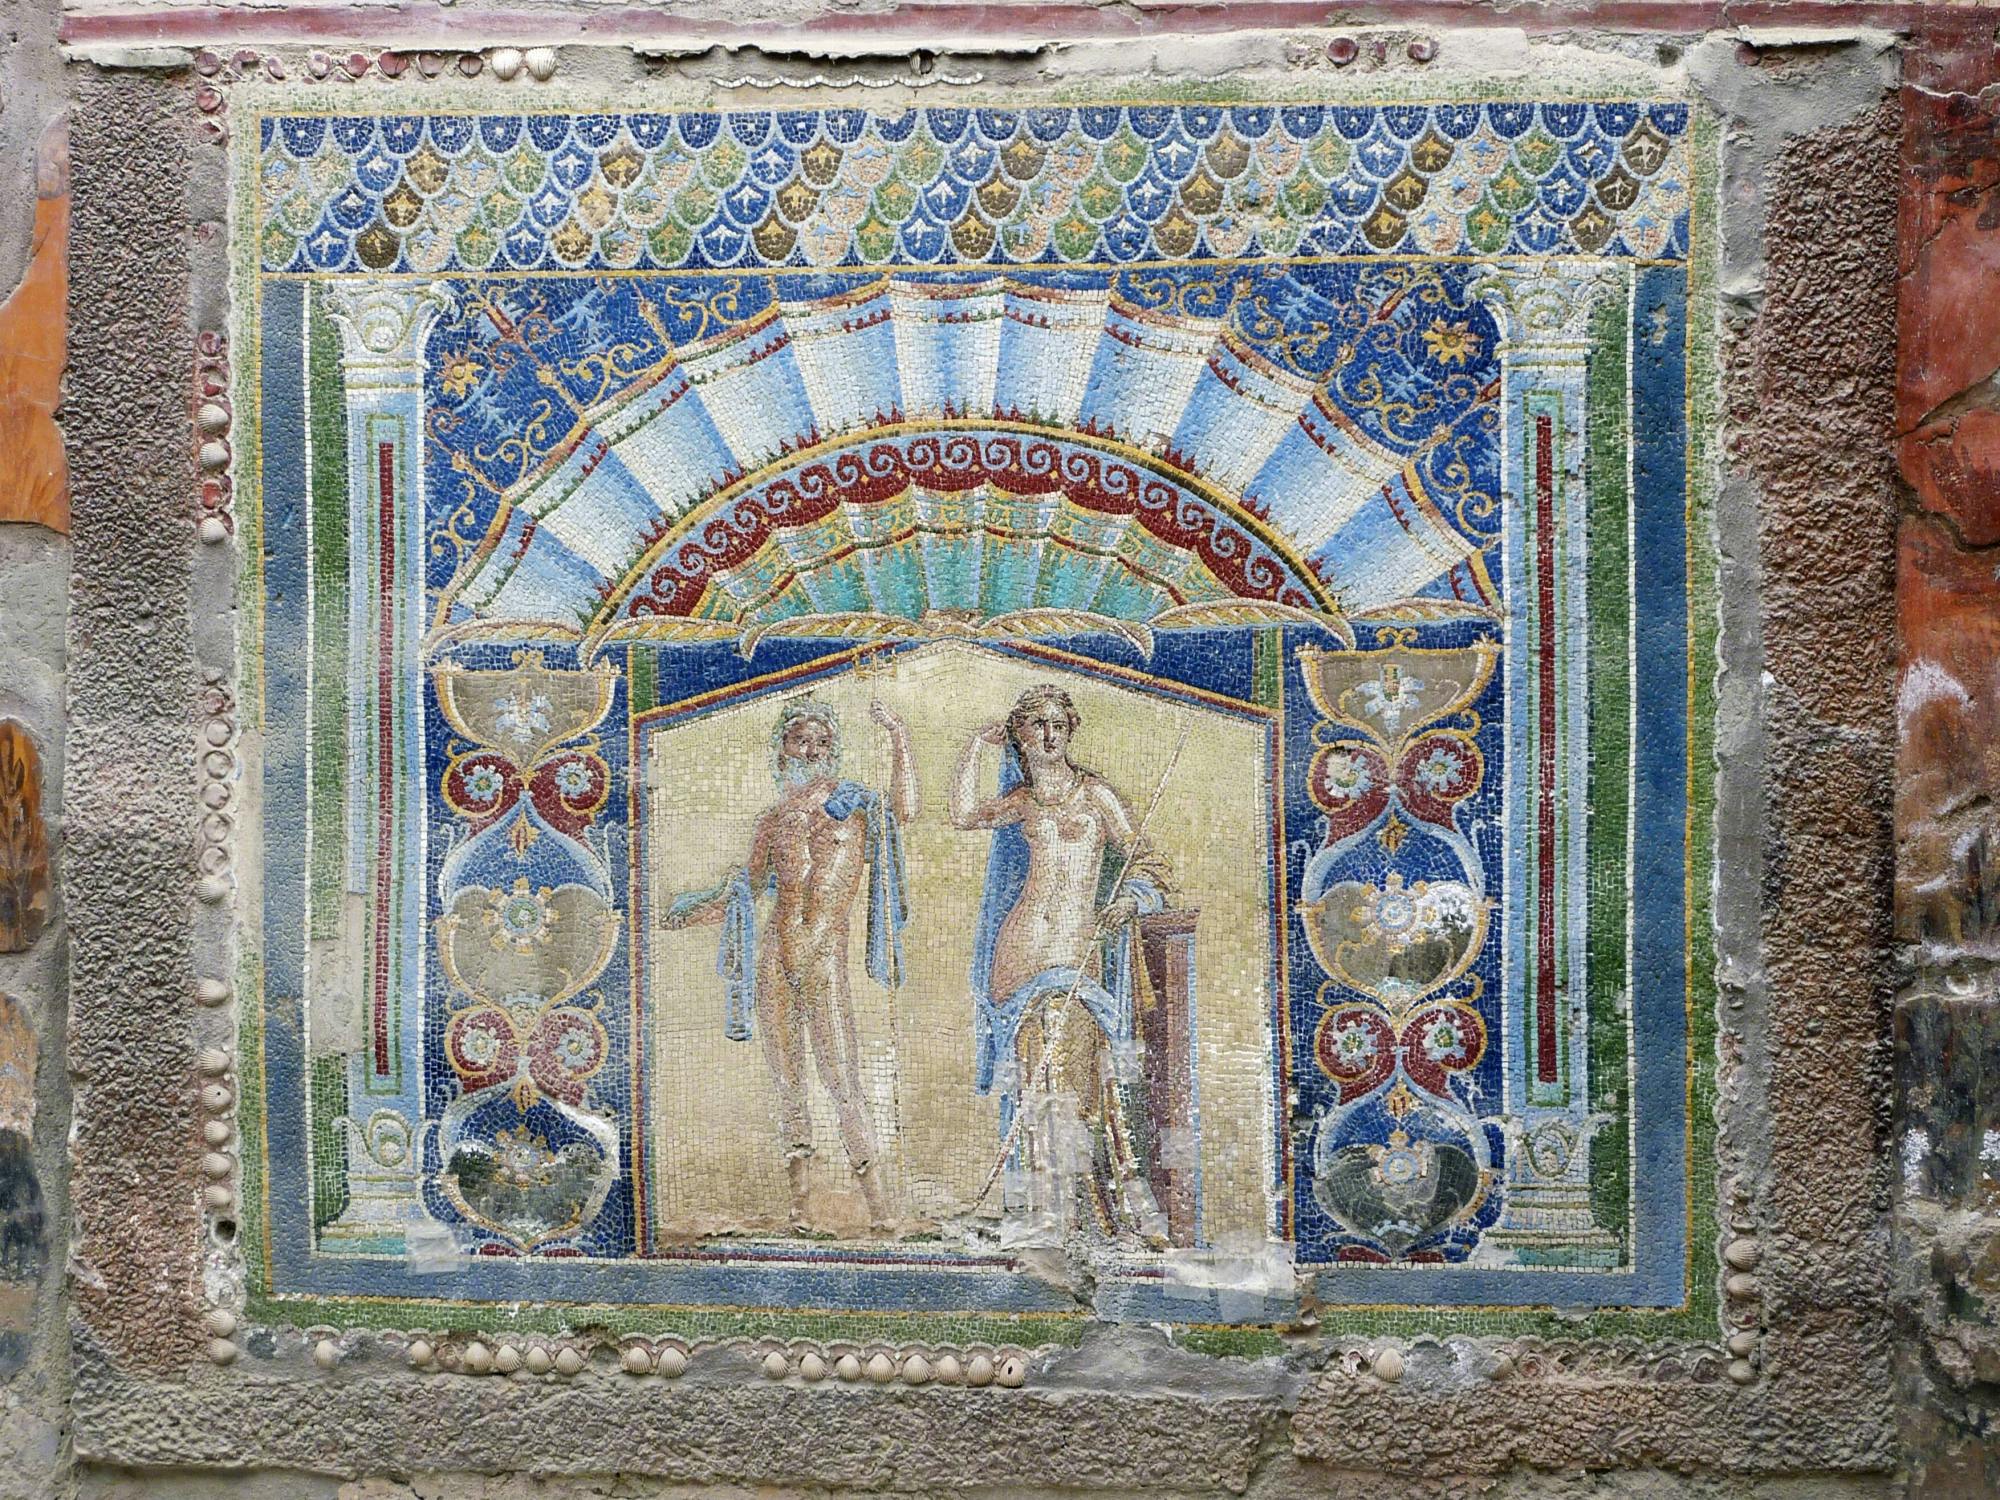 Pompeii & Herculaneum from Amalfi Coast